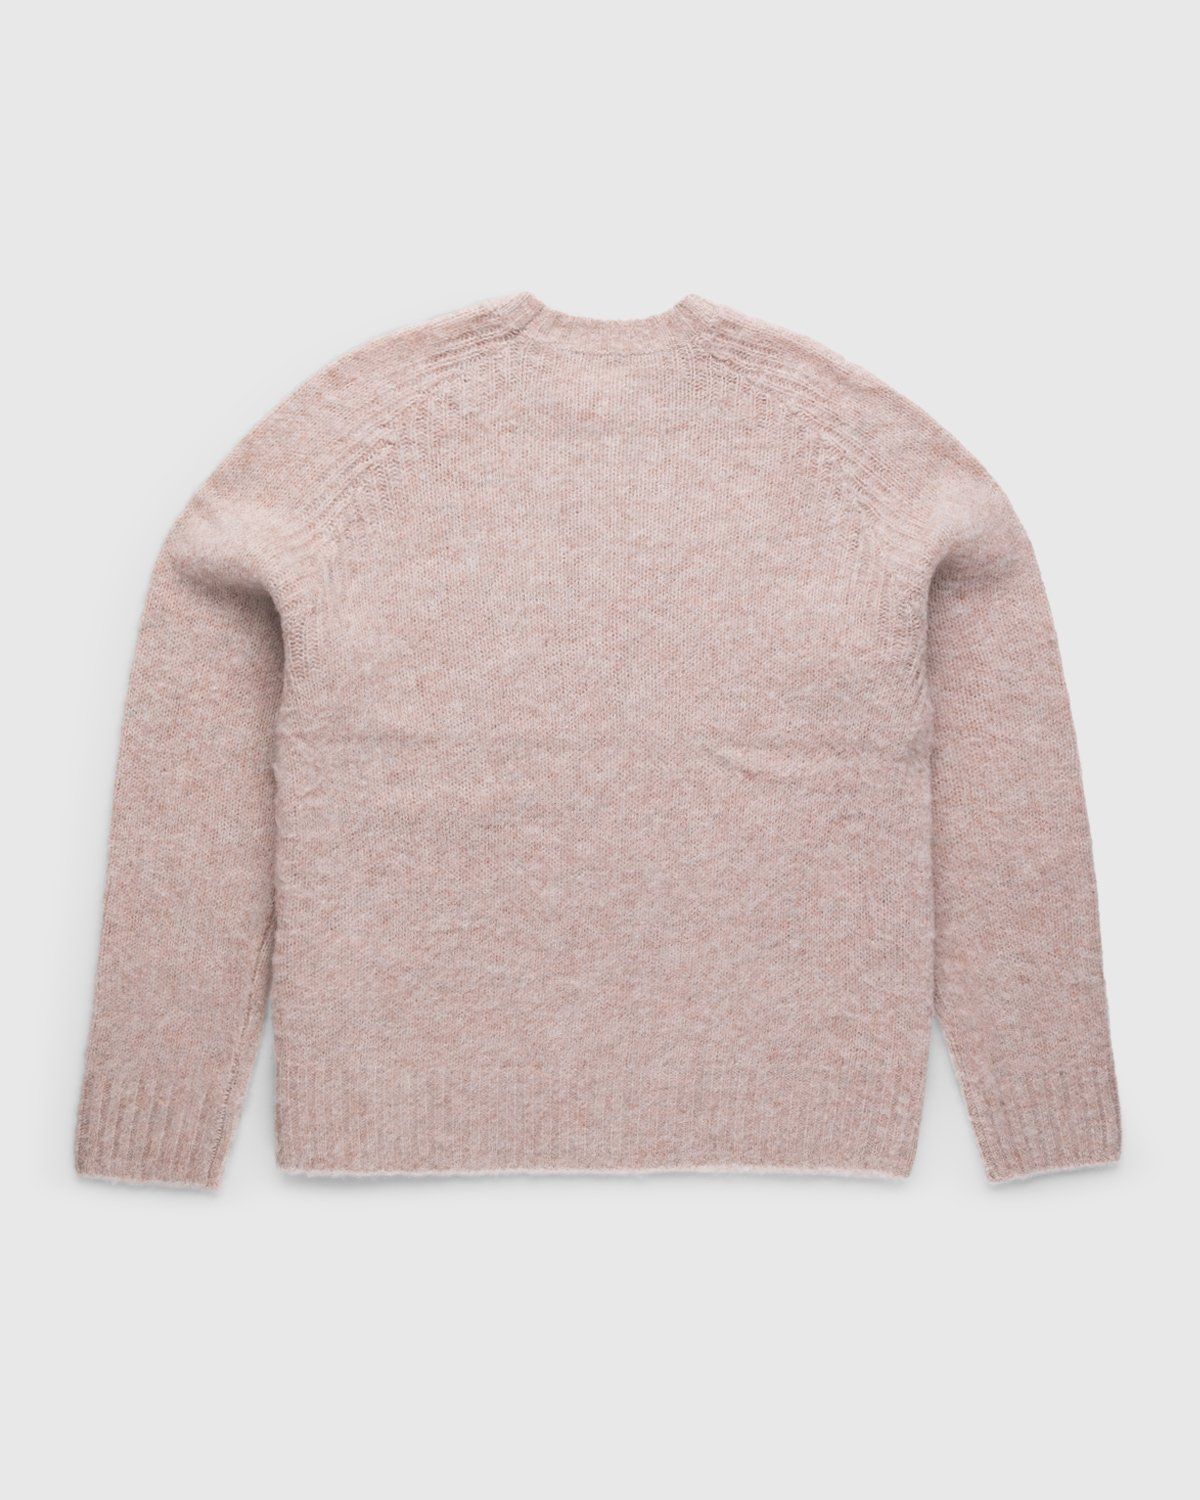 Acne Studios – Knit Sweater Pastel Pink - Crewnecks - Pink - Image 2